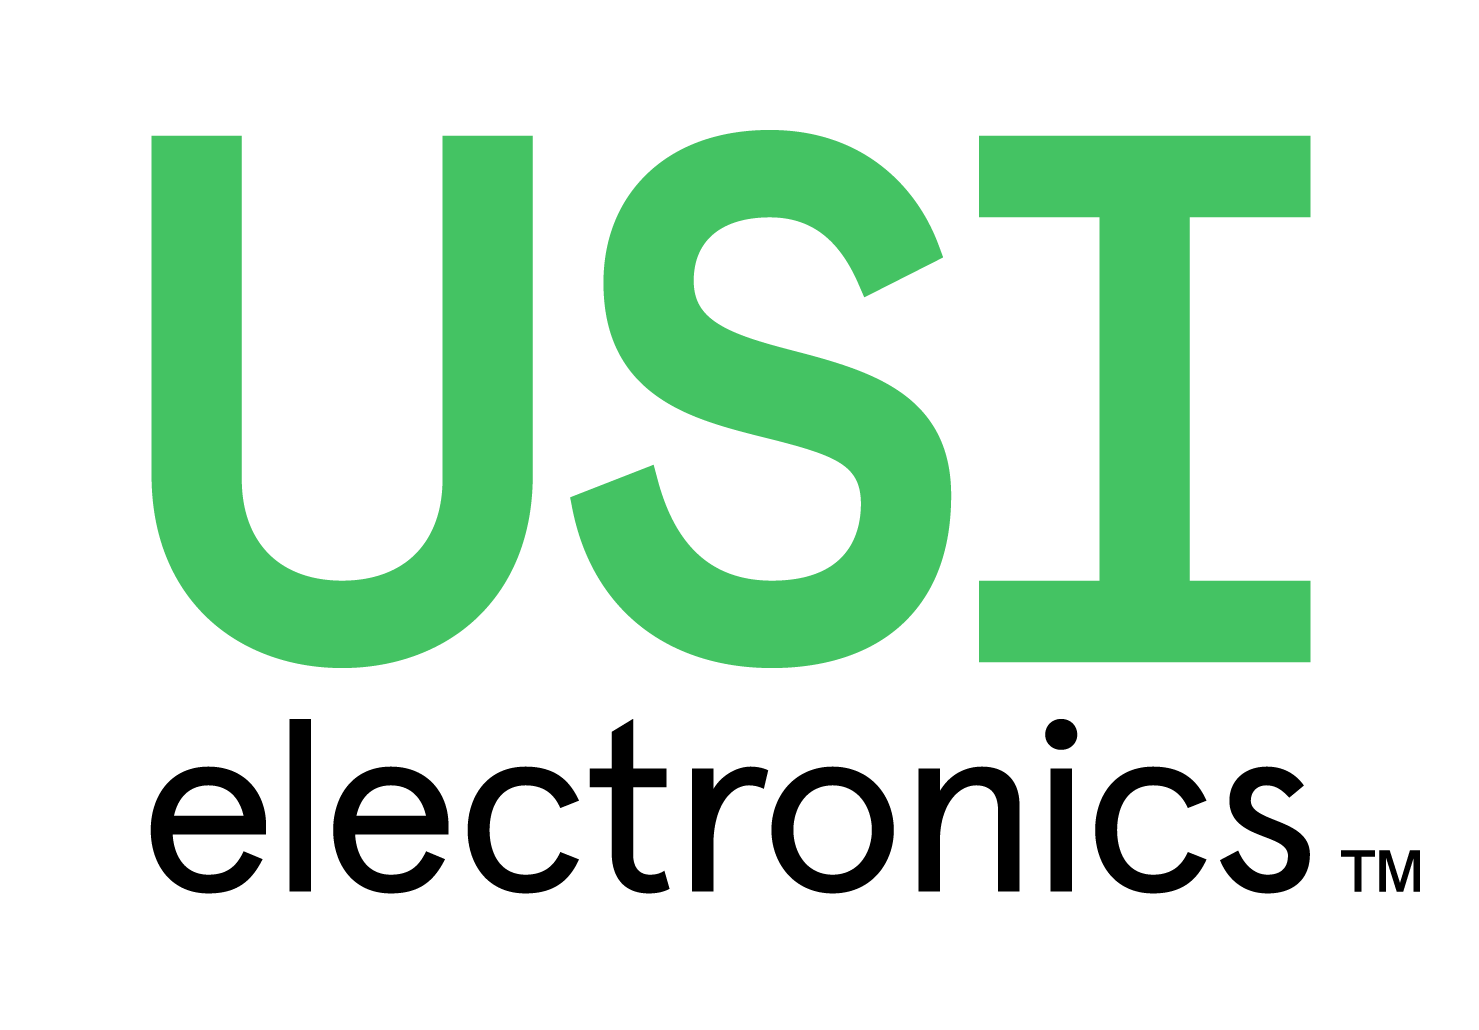 USI Logo